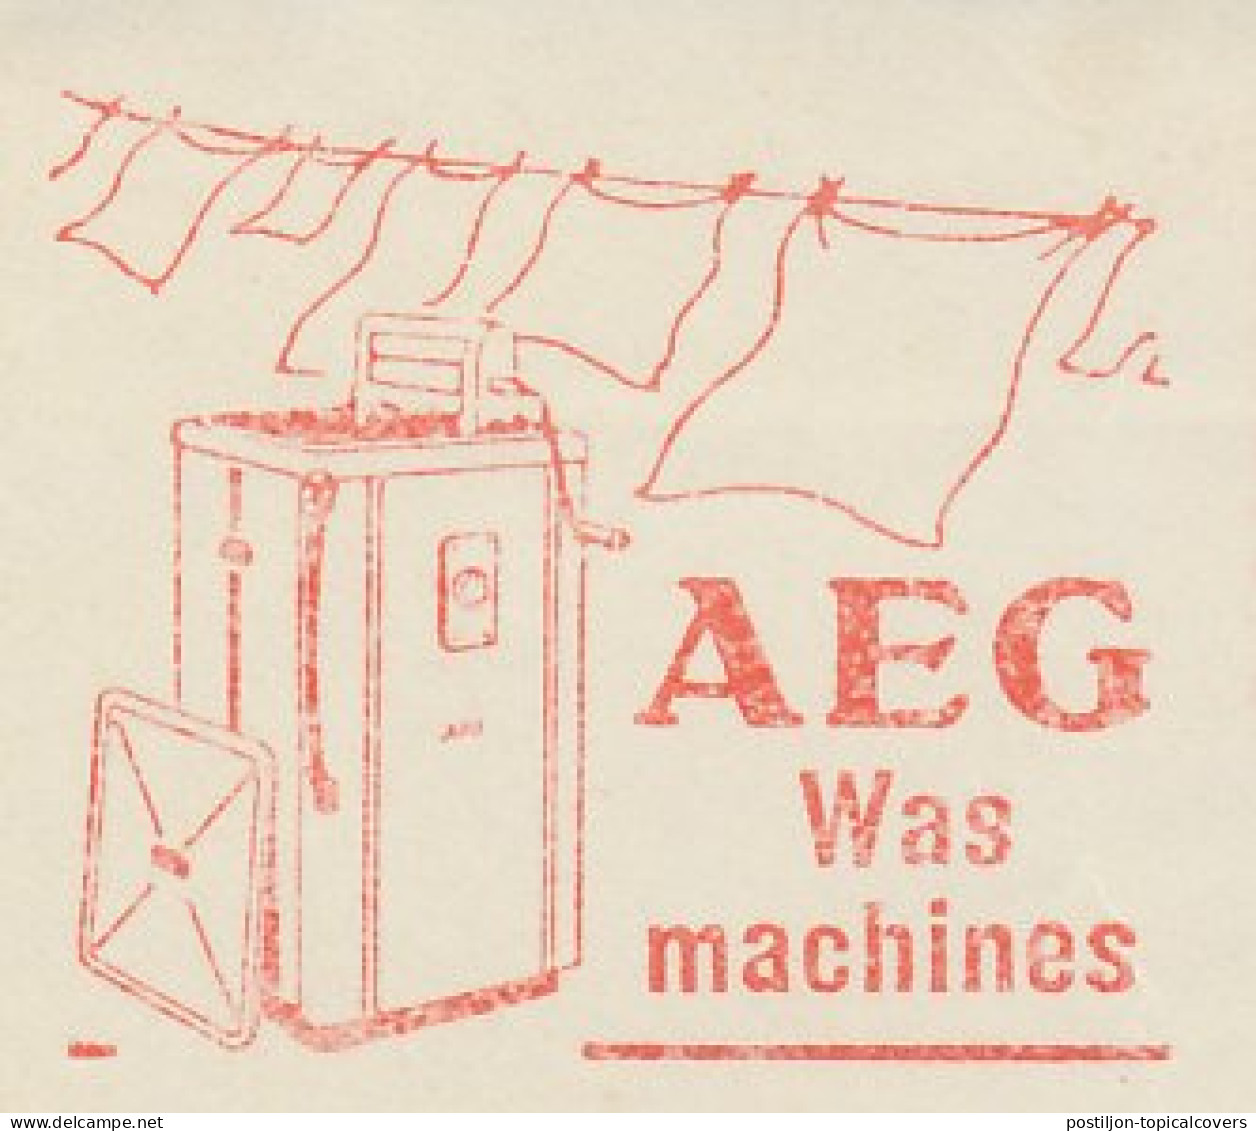 Meter Cut Netherlands 1960 Washing Machine - AEG - Non Classés